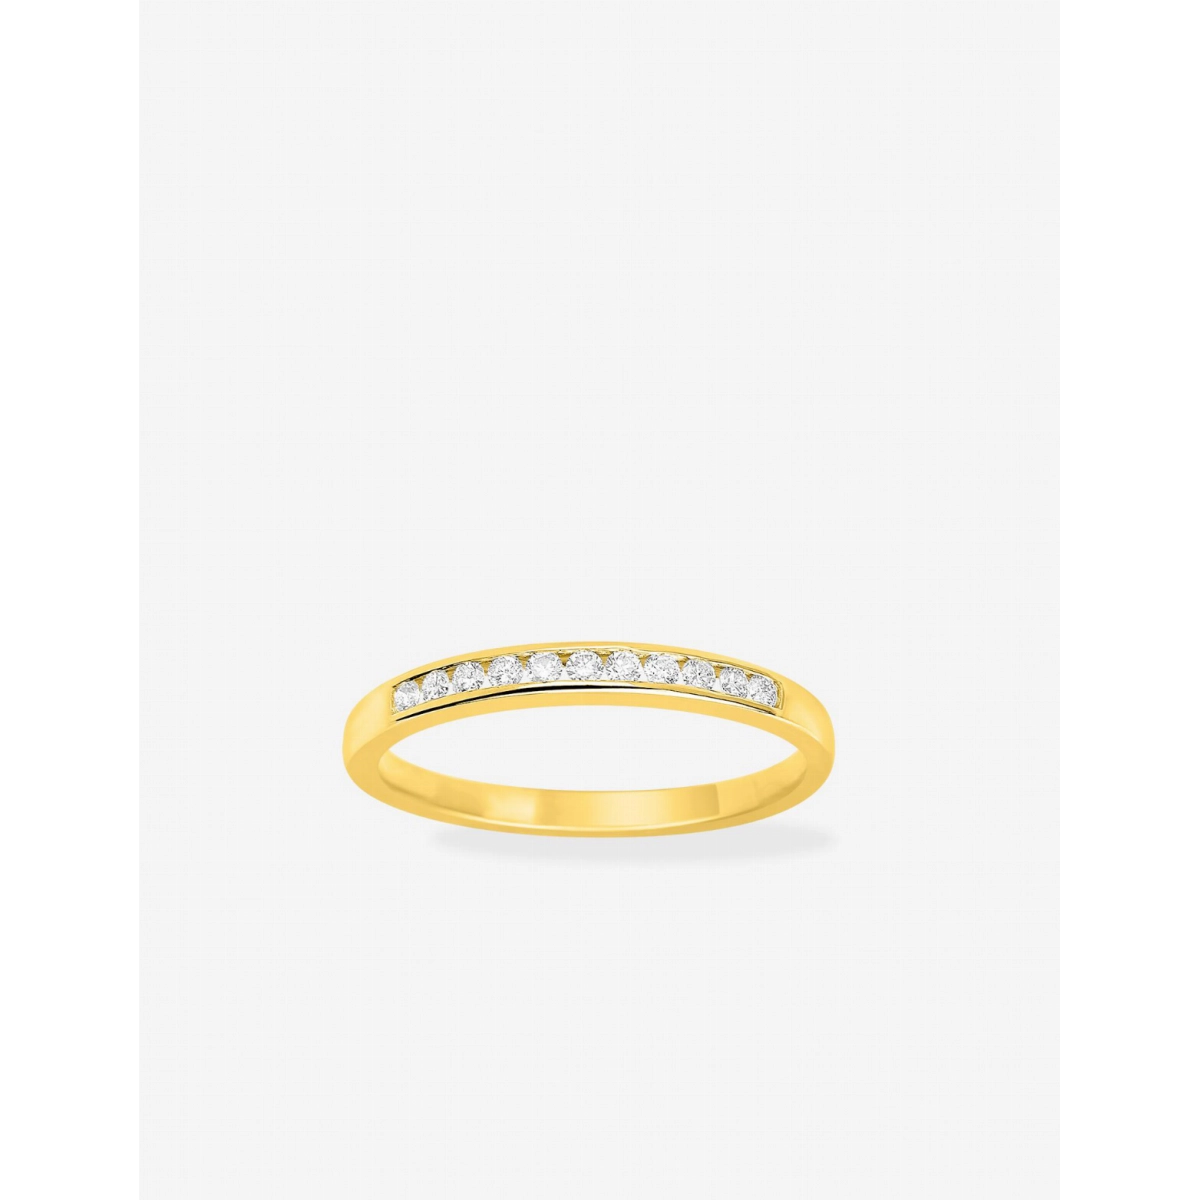 Wedding ring diam 0.15ct GHP1P2 18K YG Lua Blanca  2.4939.19 - Size 50